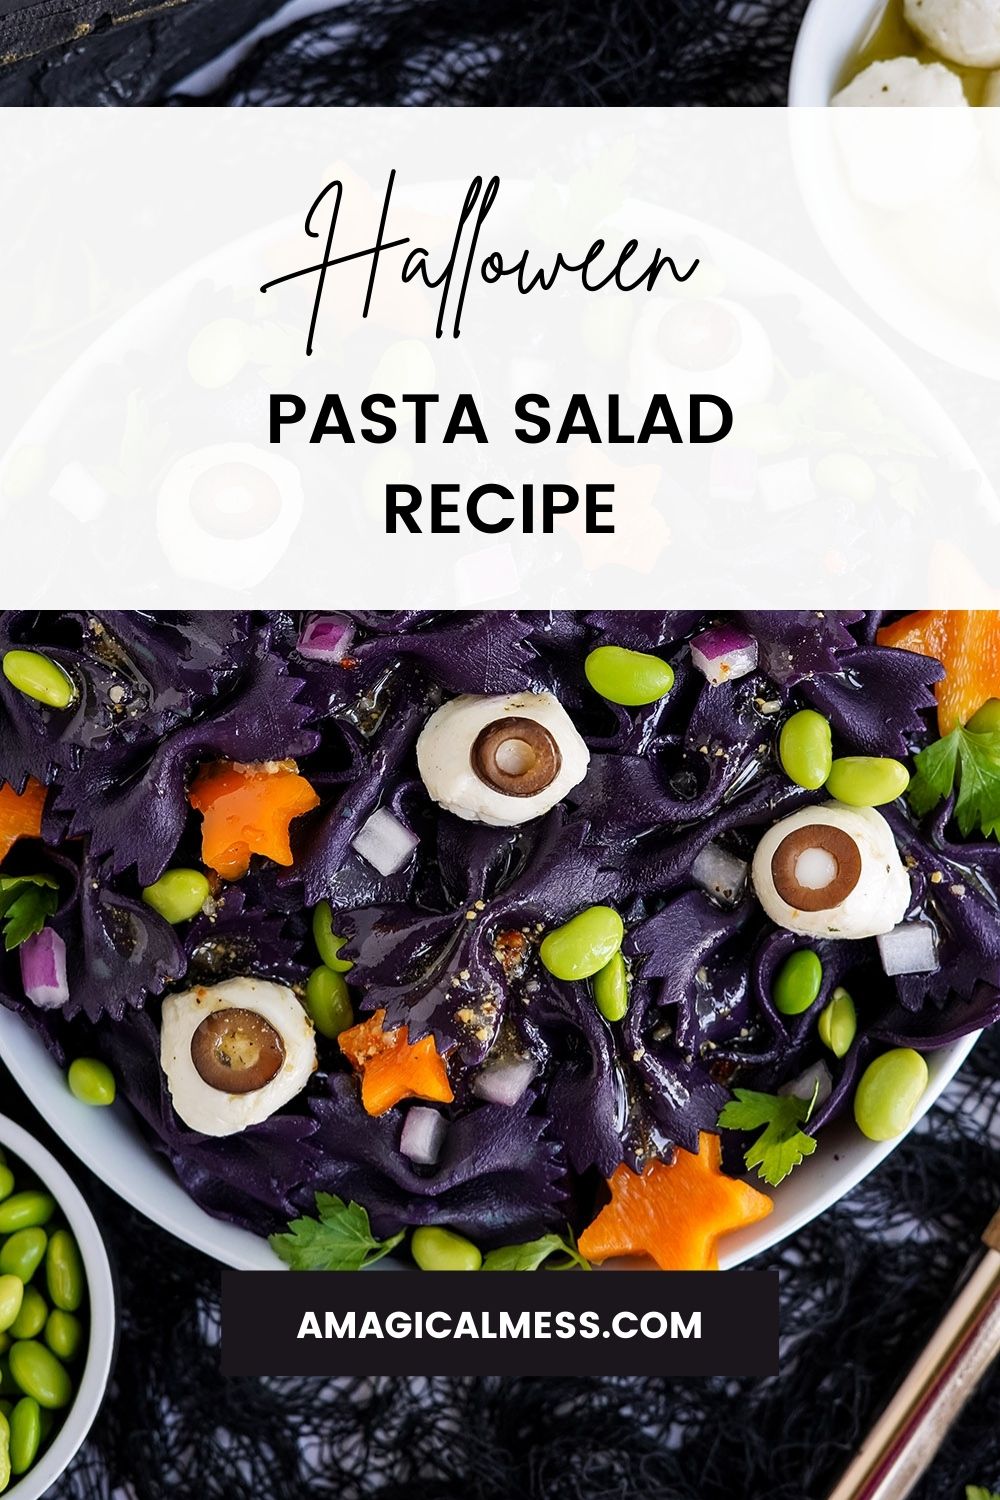 Dark pasta salad that looks like it has eyes for Halloween.